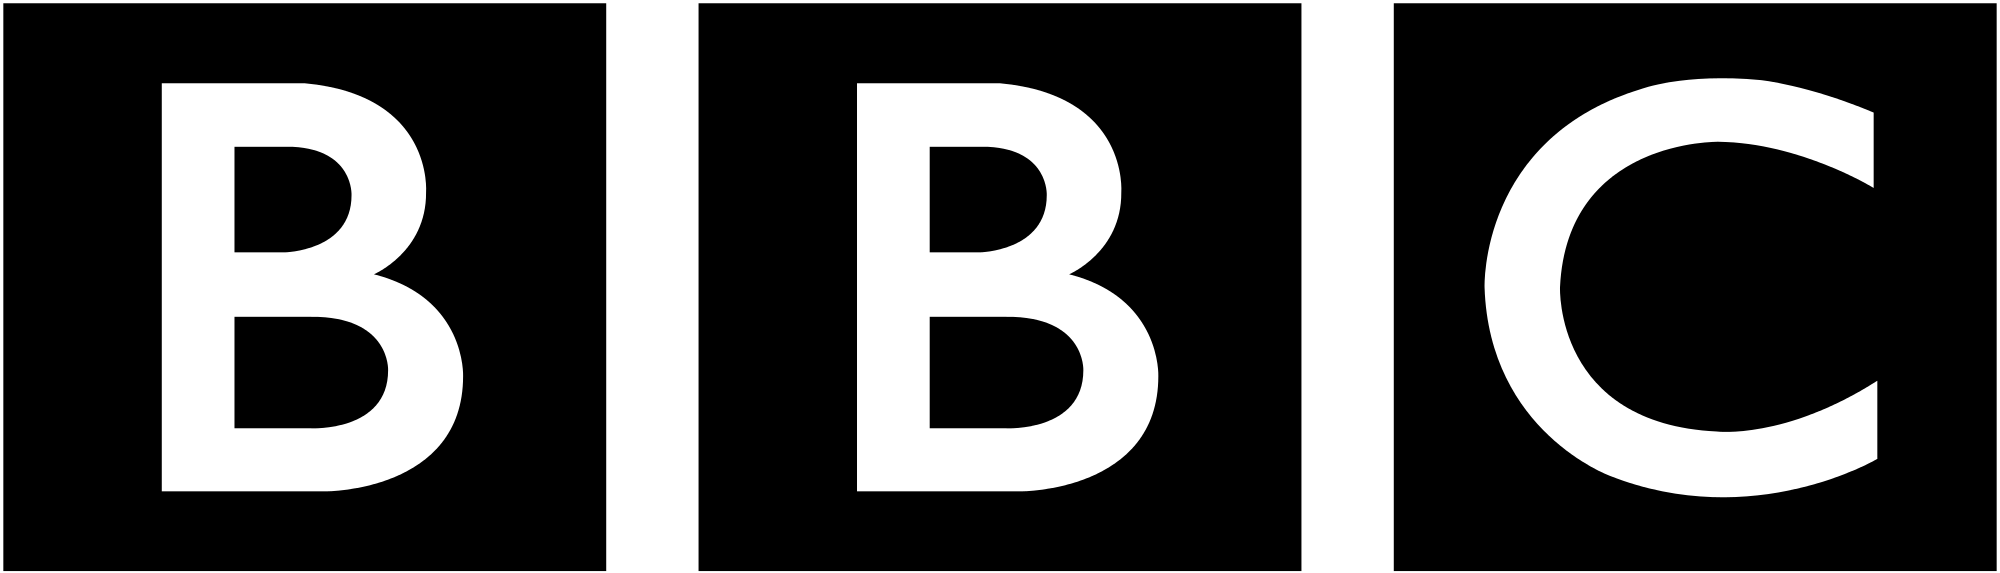 Bbc Logo Transparent Png - Pl